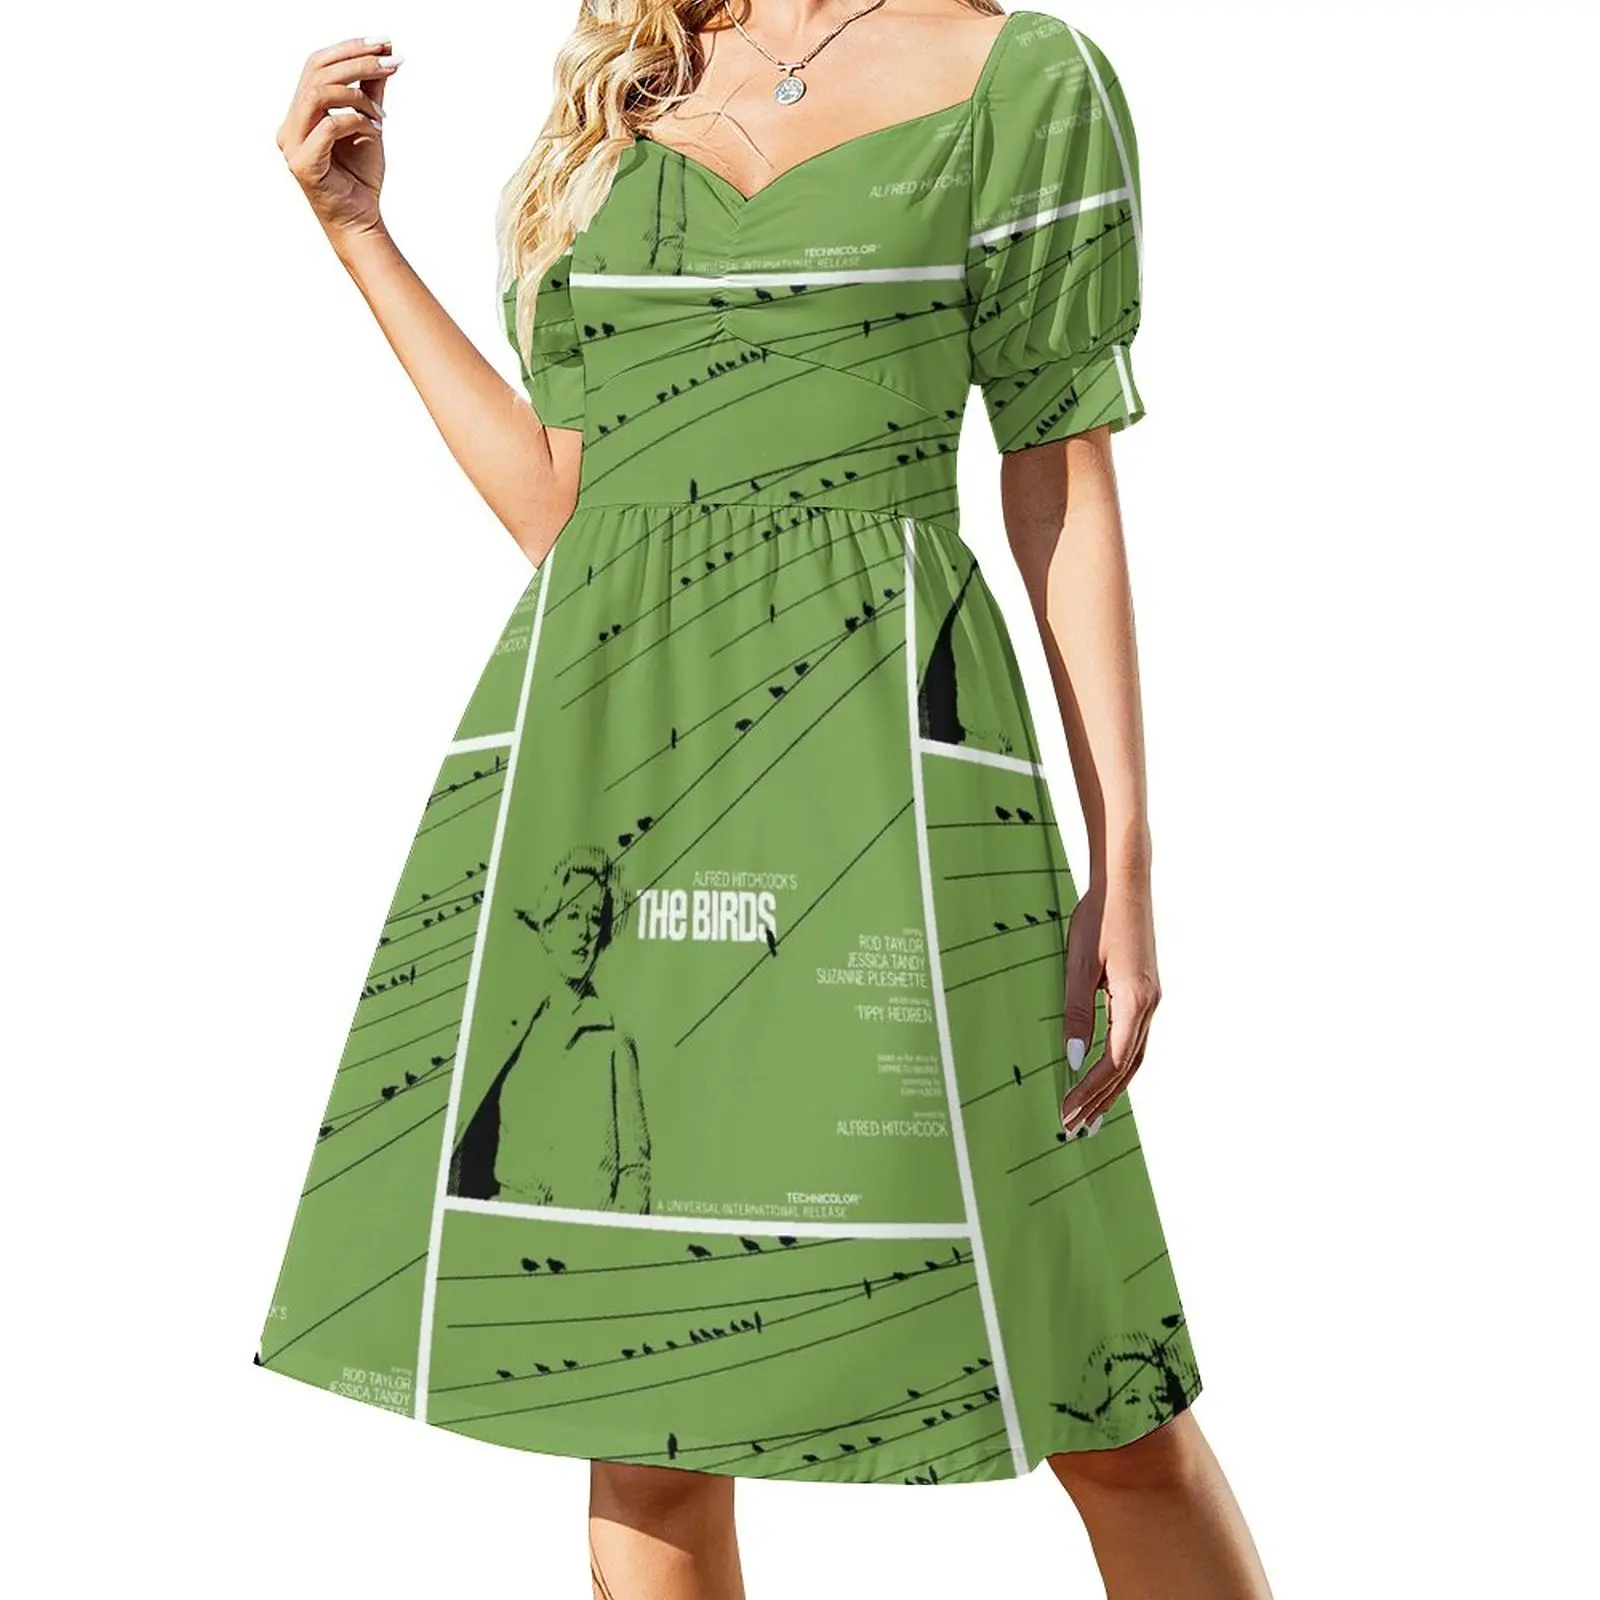 

The Birds (1963) - Movie poster design Dress Party dresses elegant dresses plus sizes